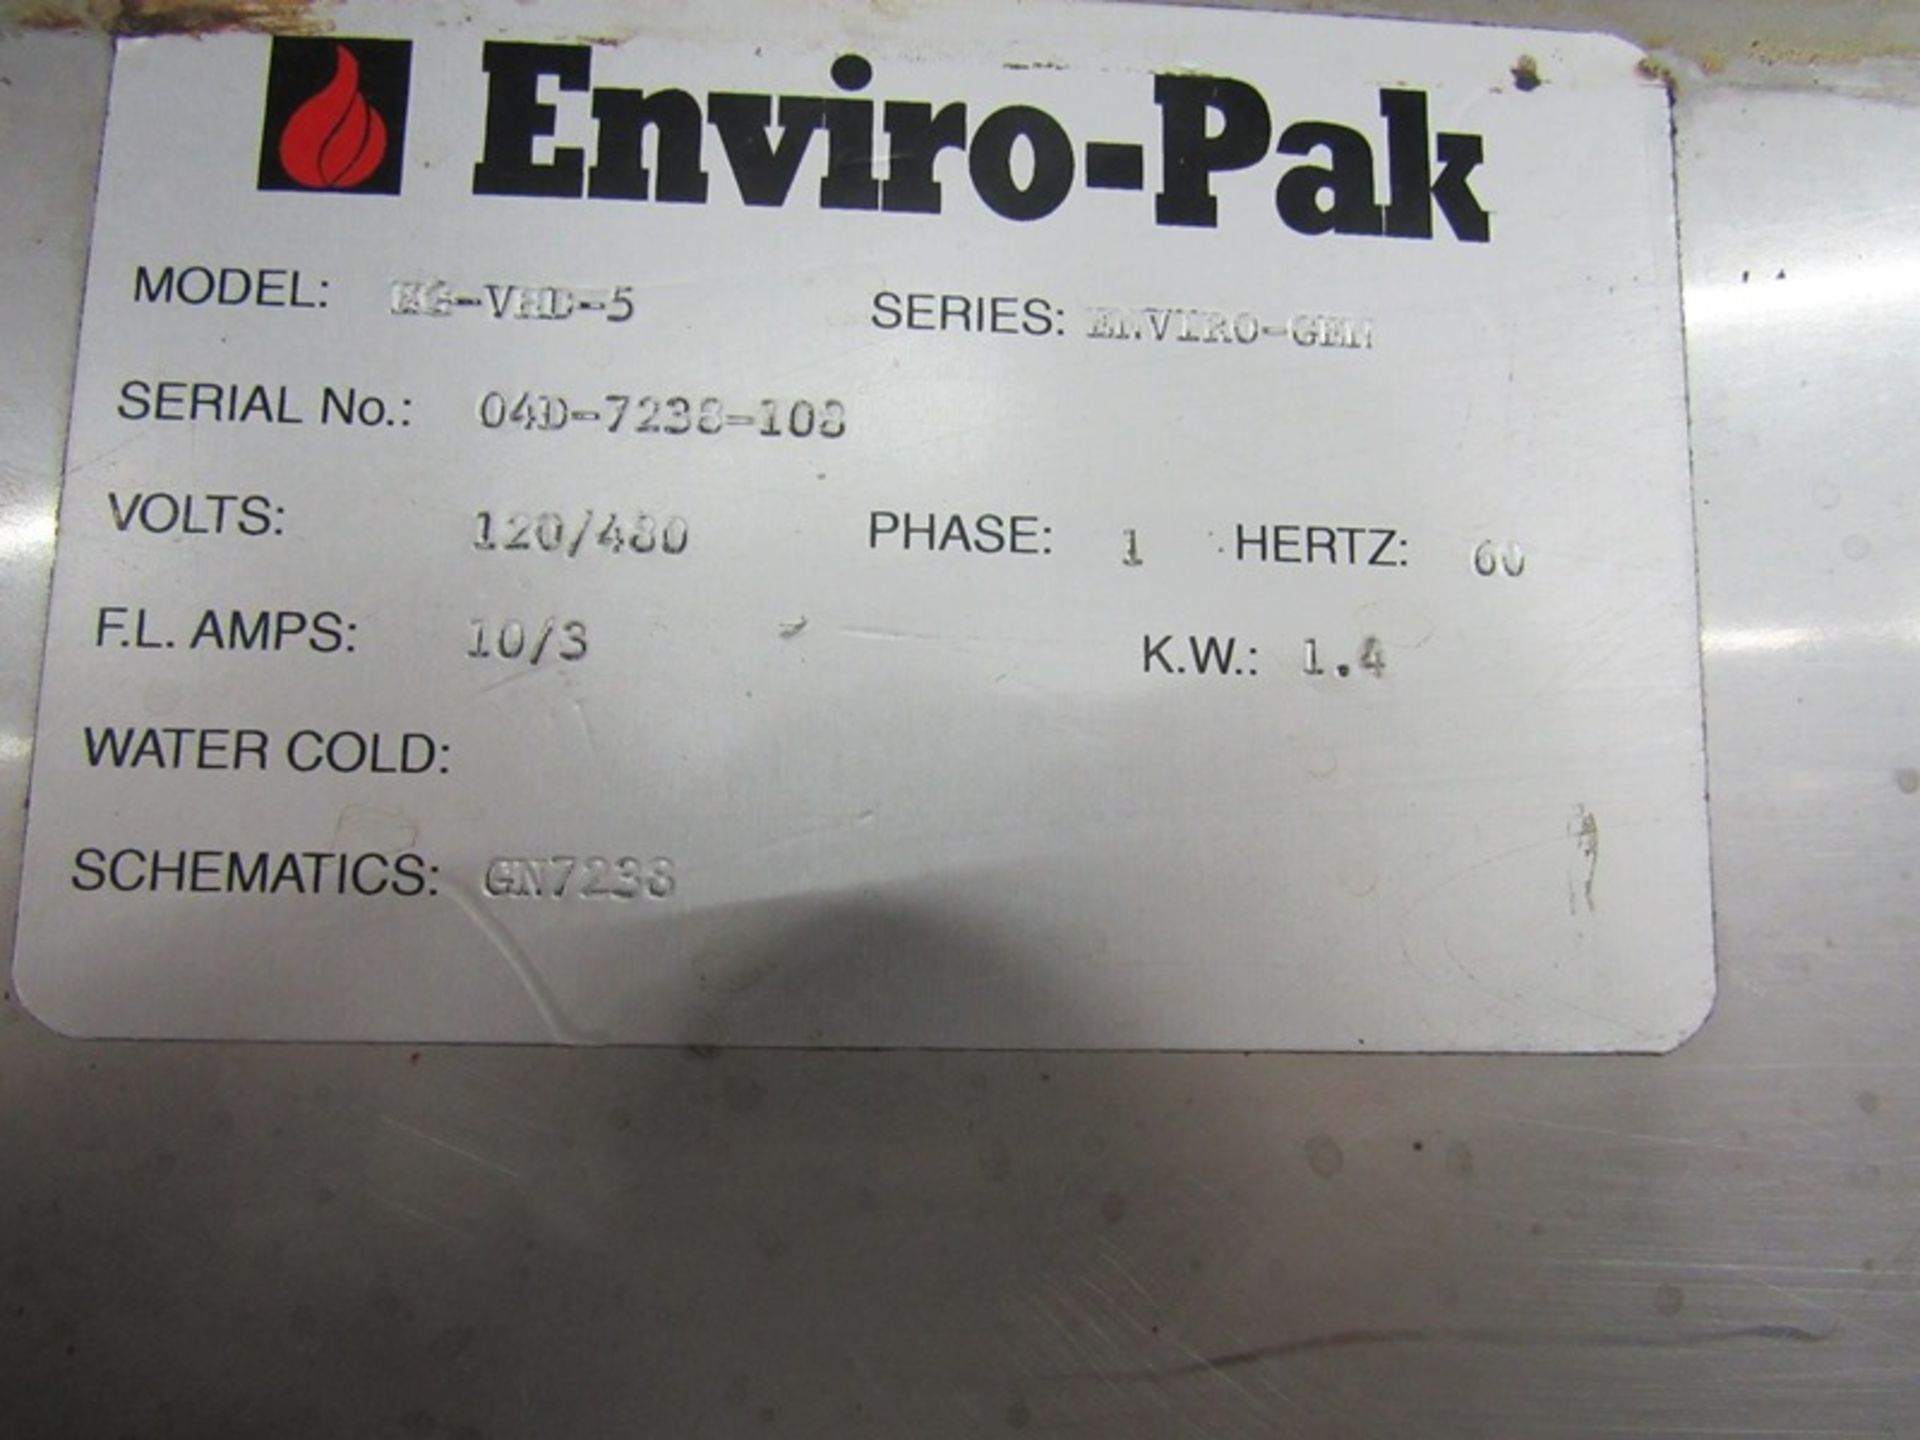 Enviro-Pak Mdl. EG-VHD-5 Smoke Generator, Ser. #04D-7238-108, 120/460 volts, single phase, Located - Image 5 of 5